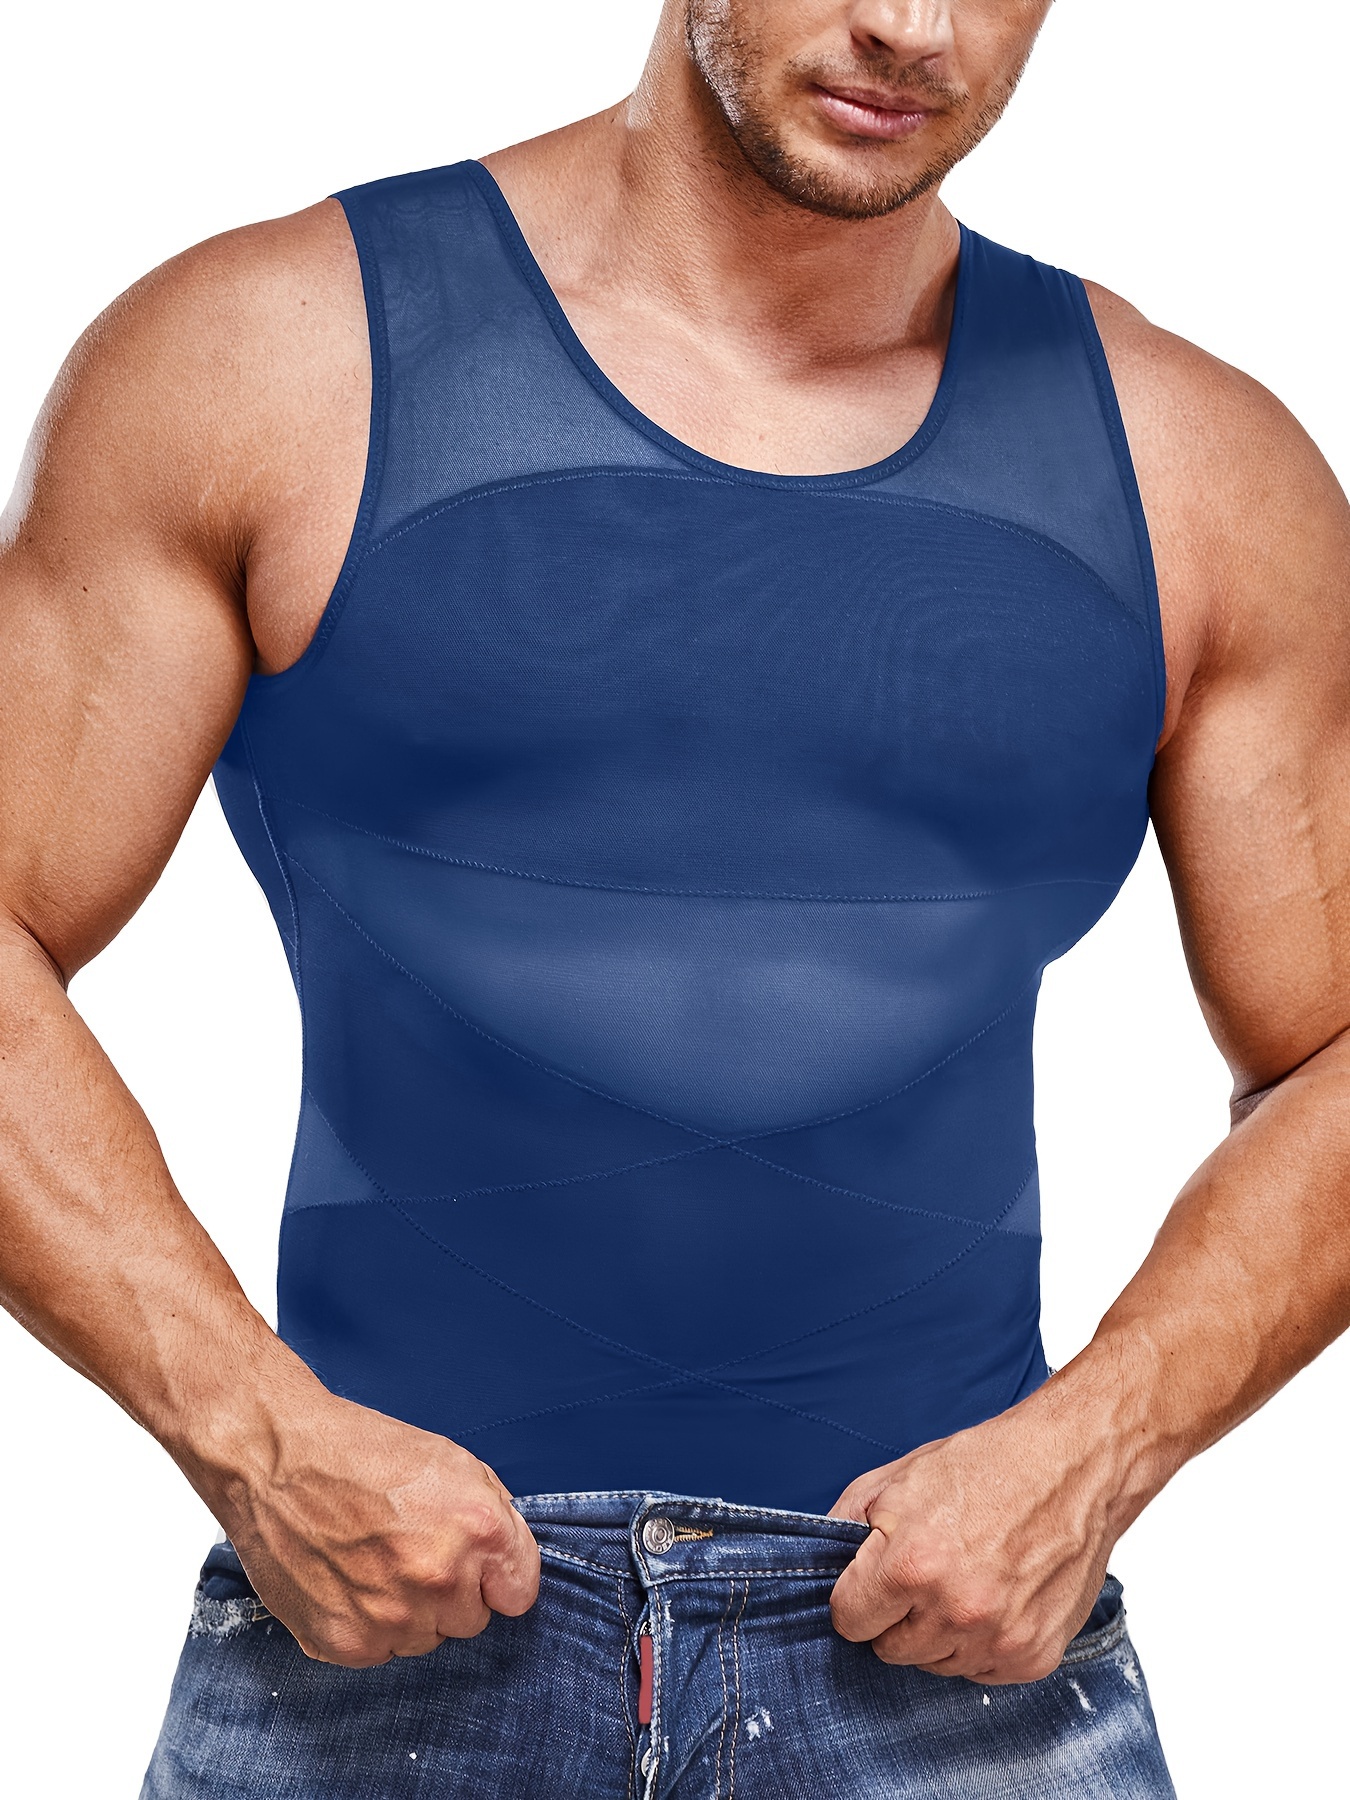 Men Shapewear Slimming Body Shaper Compression Shirt Tank top with Zipper  Underwear For tummy control,Black,3XL 